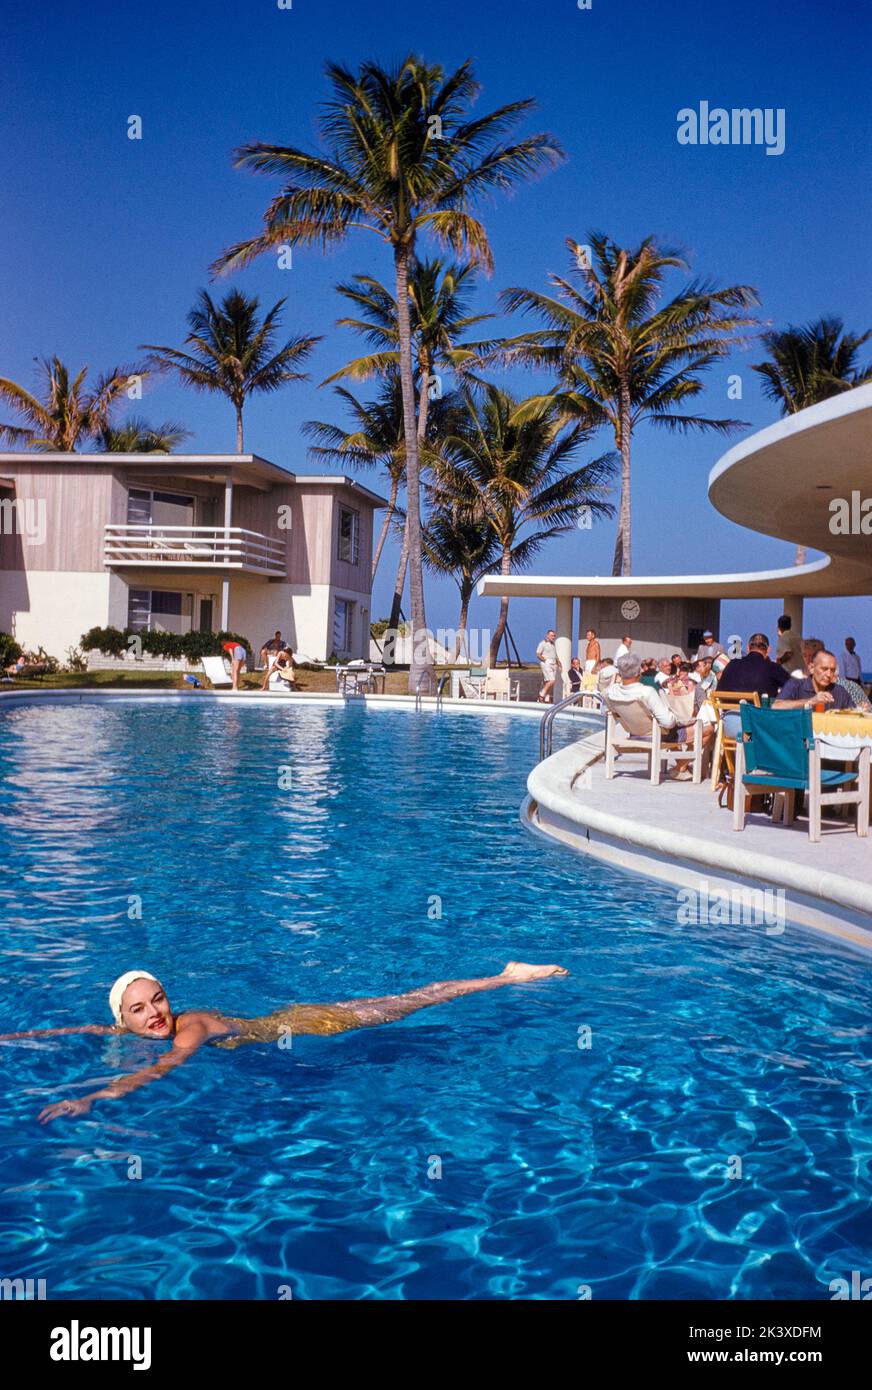 Escena de la piscina, La Coquille Club, Palm Beach, Florida, Estados Unidos, Toni Frissell Collection, diciembre de 1954 Foto de stock